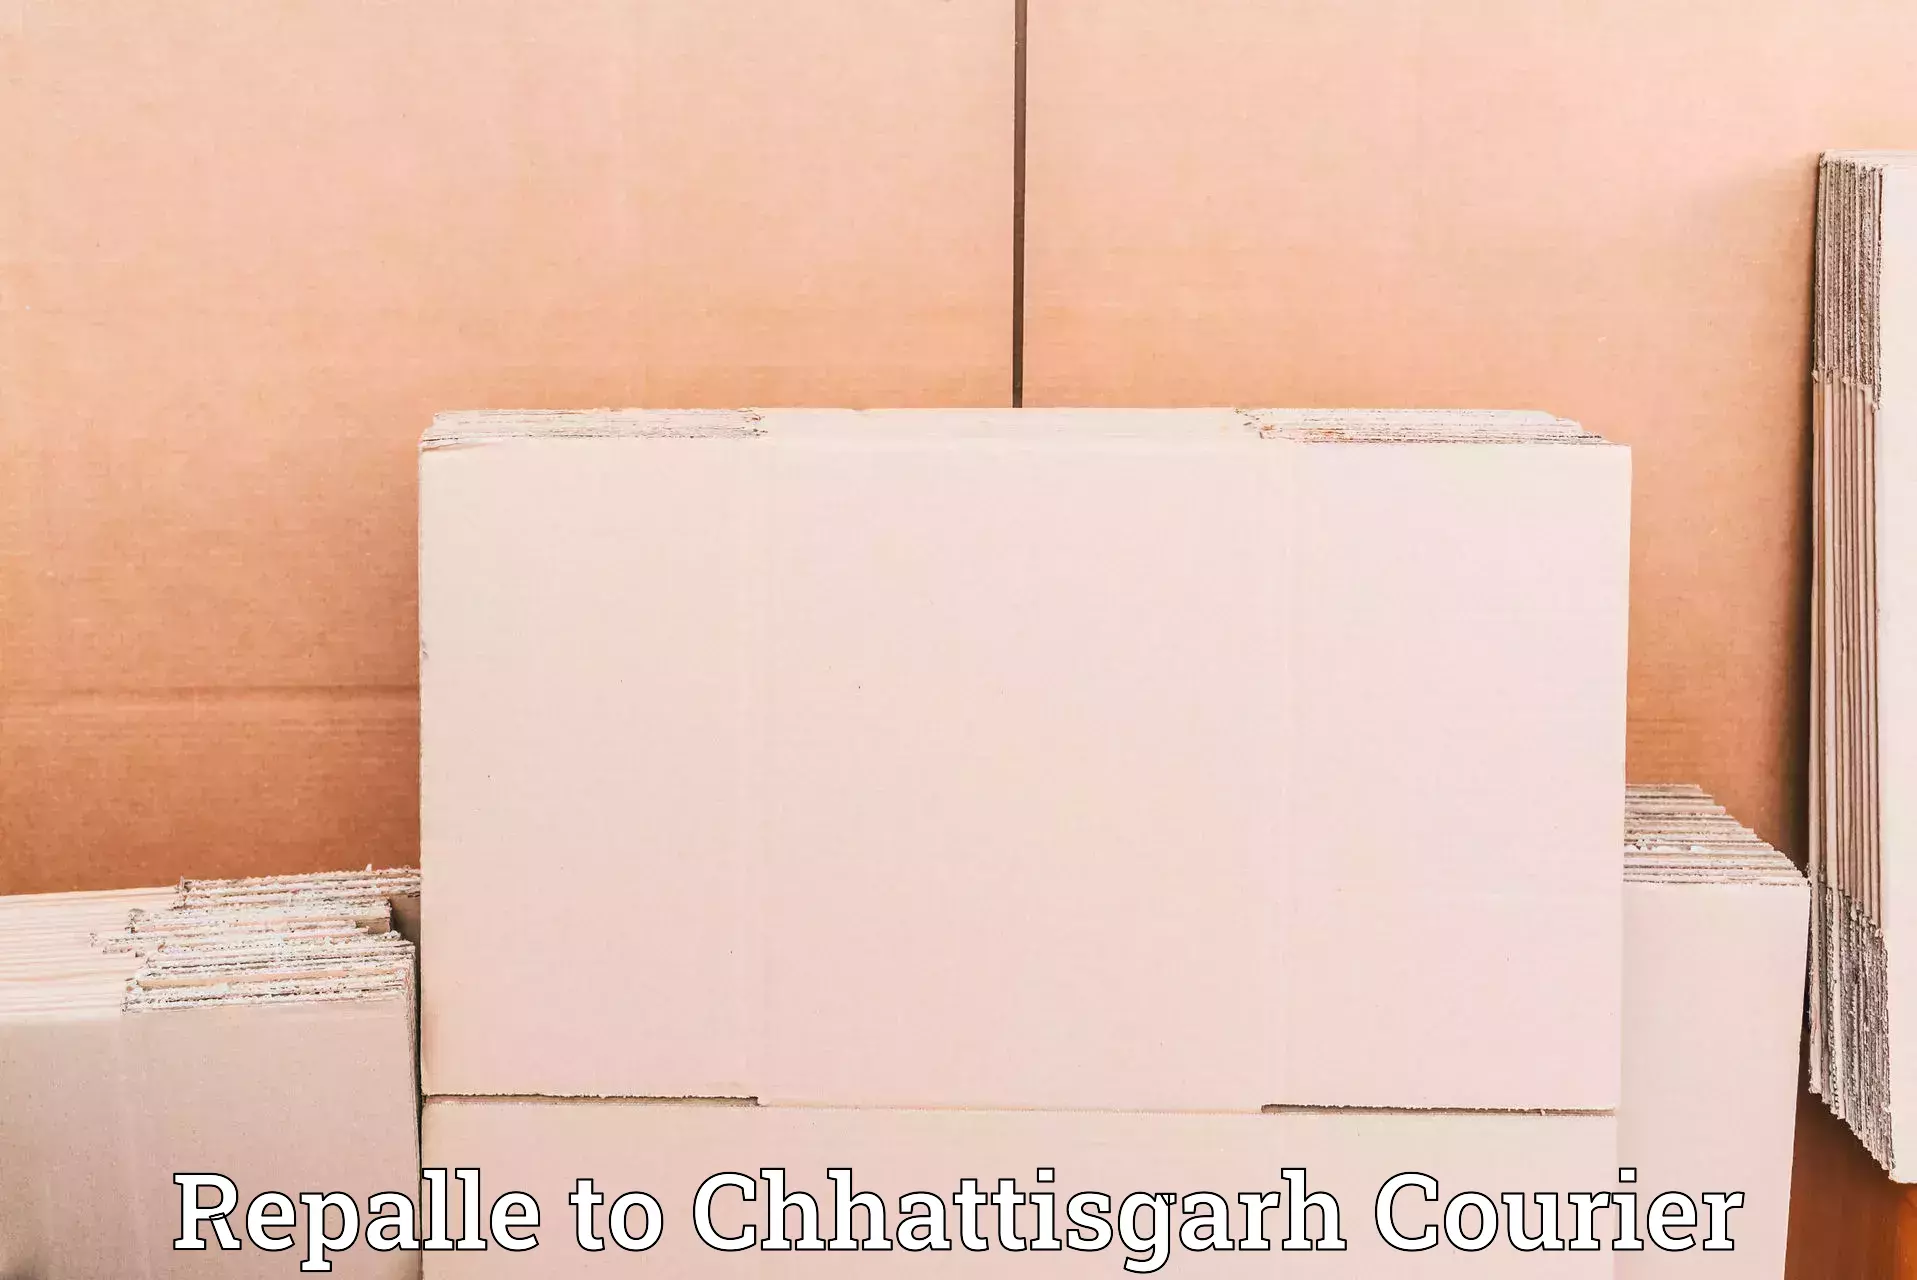 Weekend courier service Repalle to Chhattisgarh